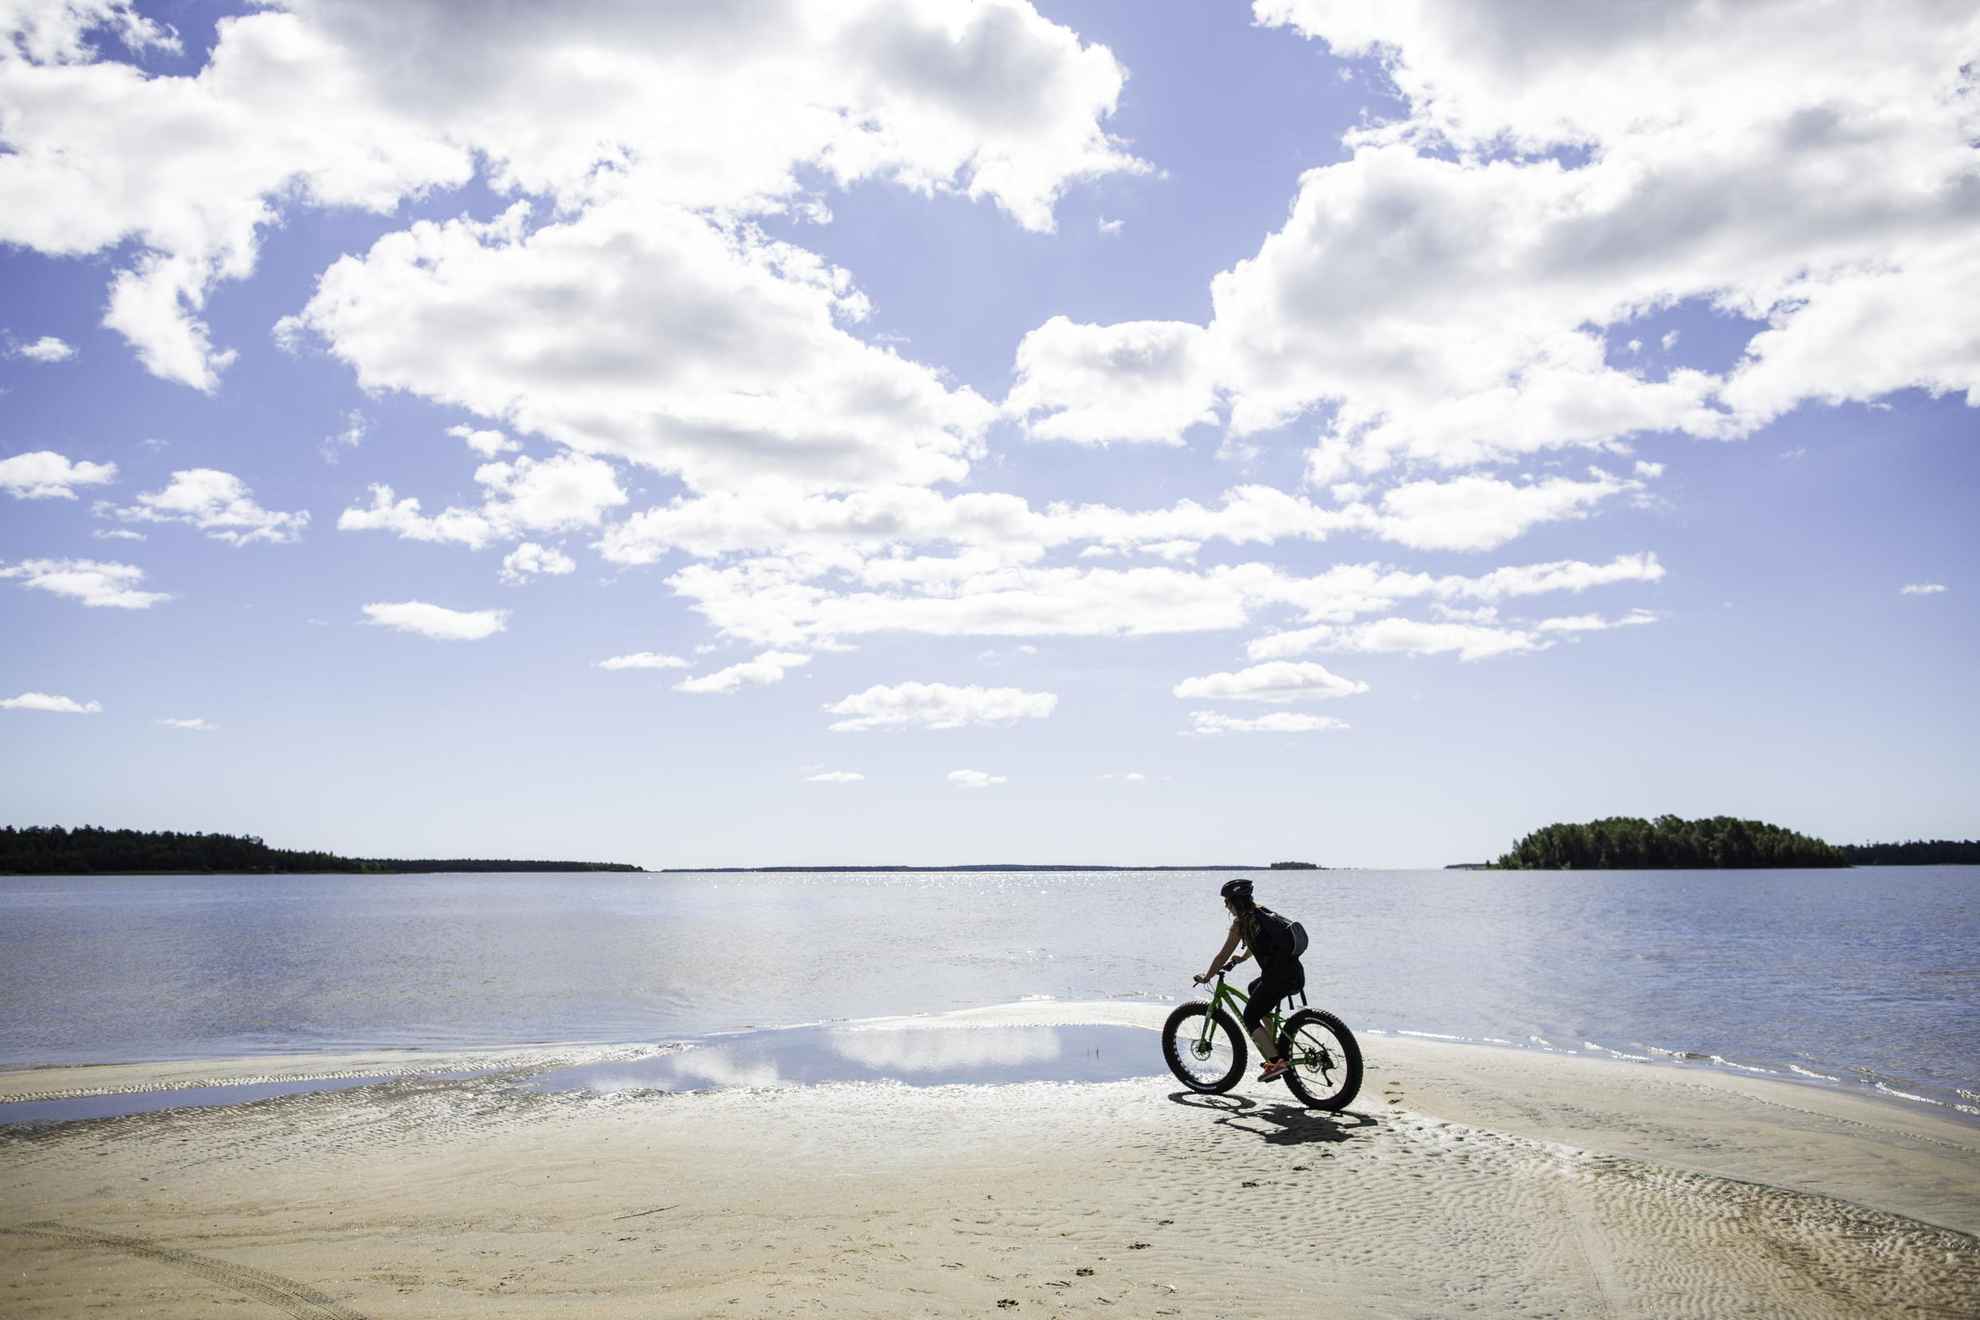 Biking at the Bothnian Bay archipelago in Swedish Lapland